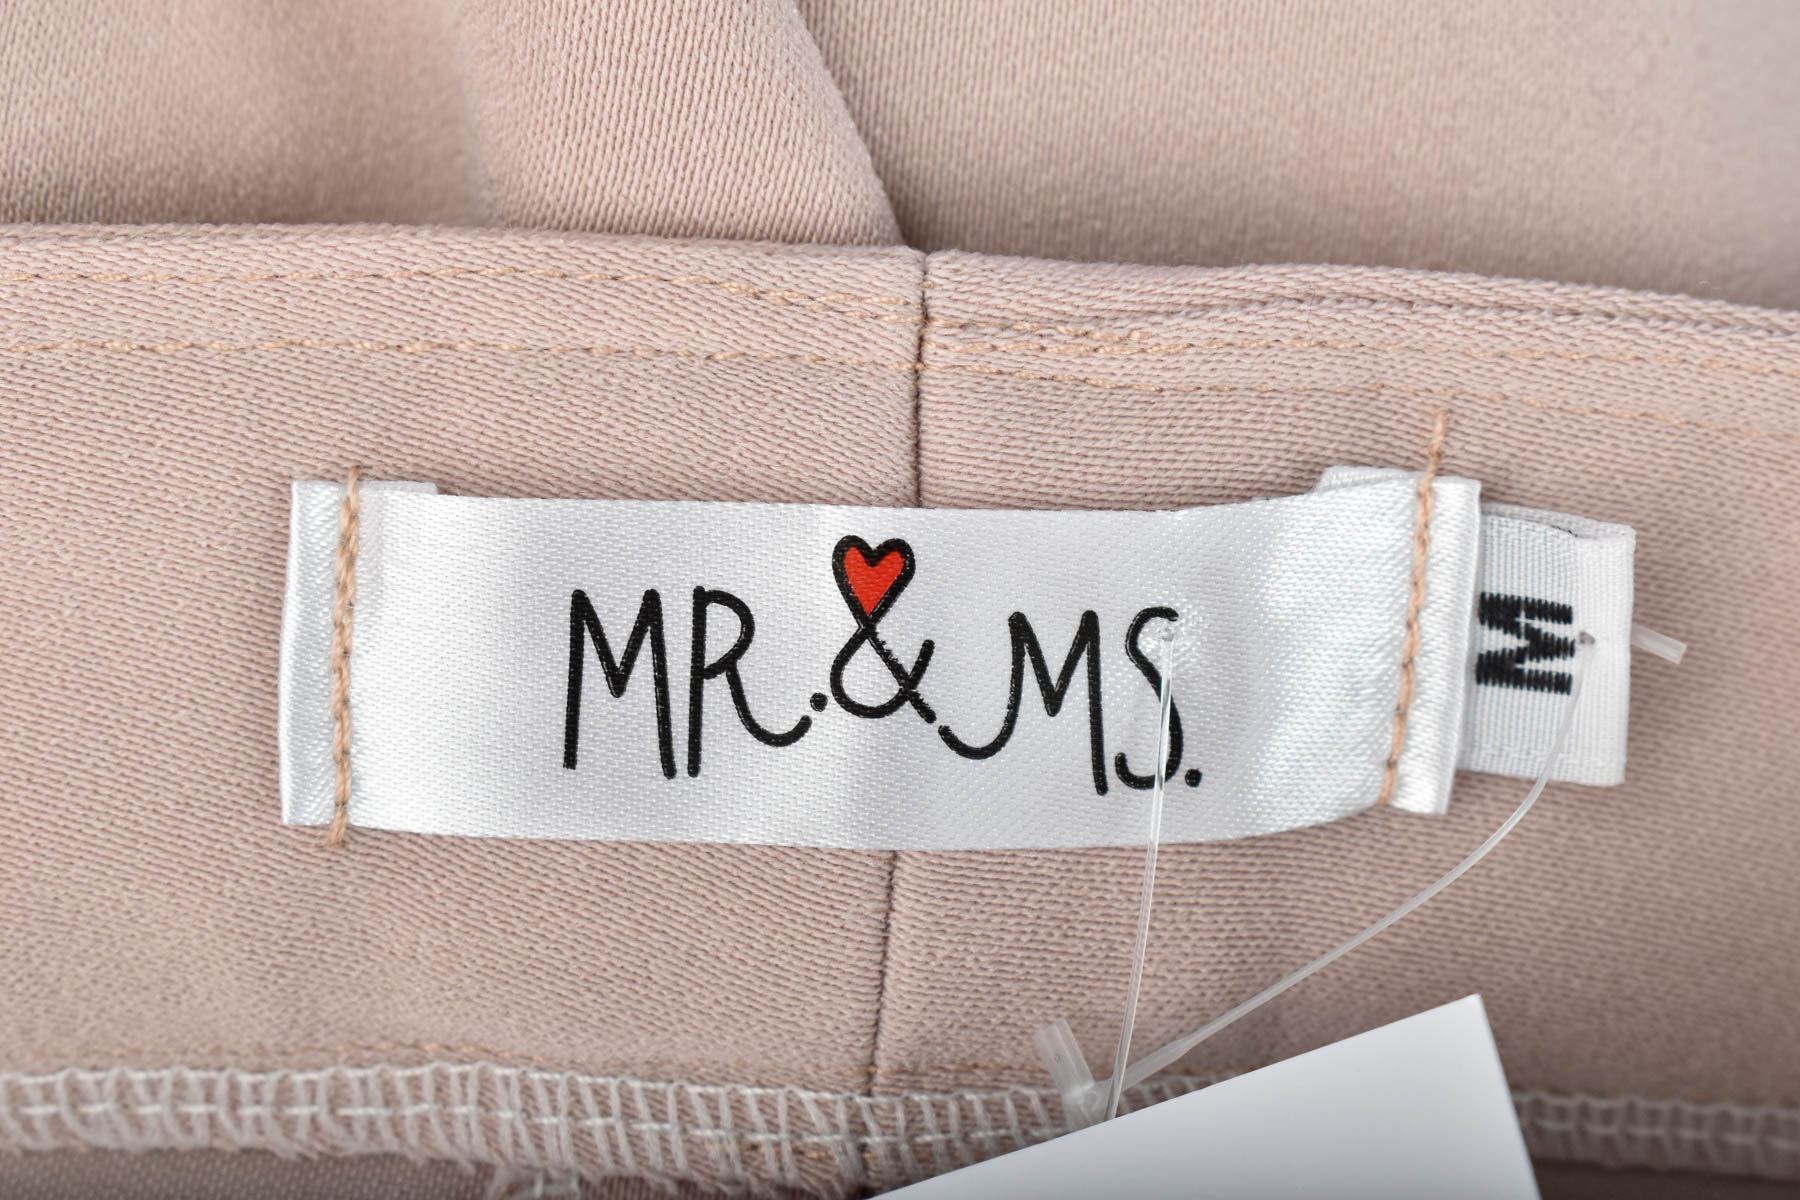 Female shorts - MR. & MS. - 2